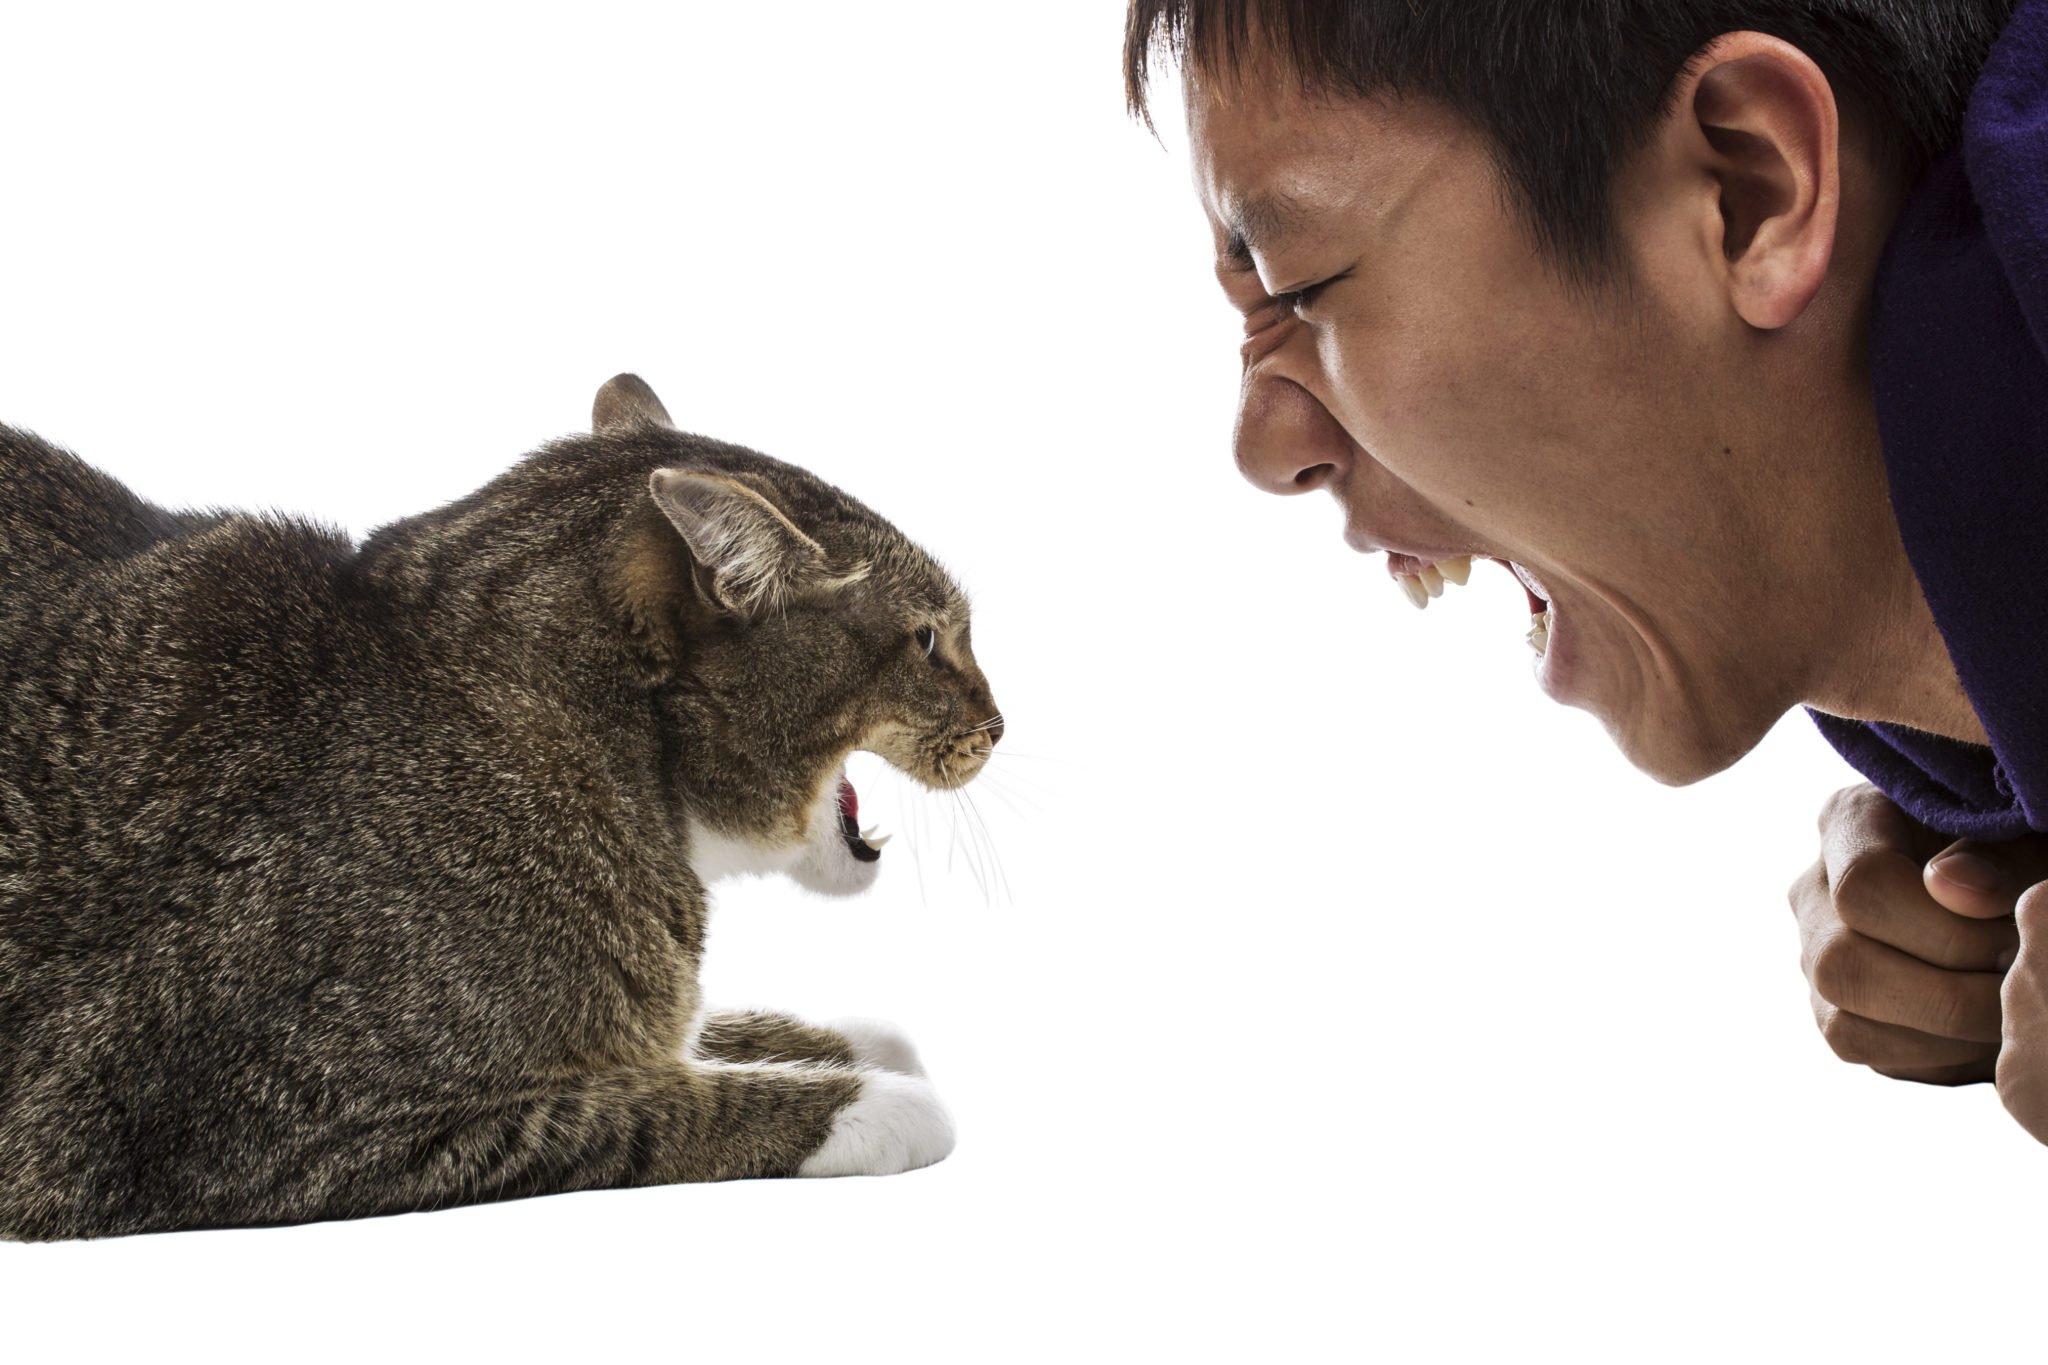 Повтори котика. Агрессия кота. Агрессия животных и людей. Агрессивное животное.